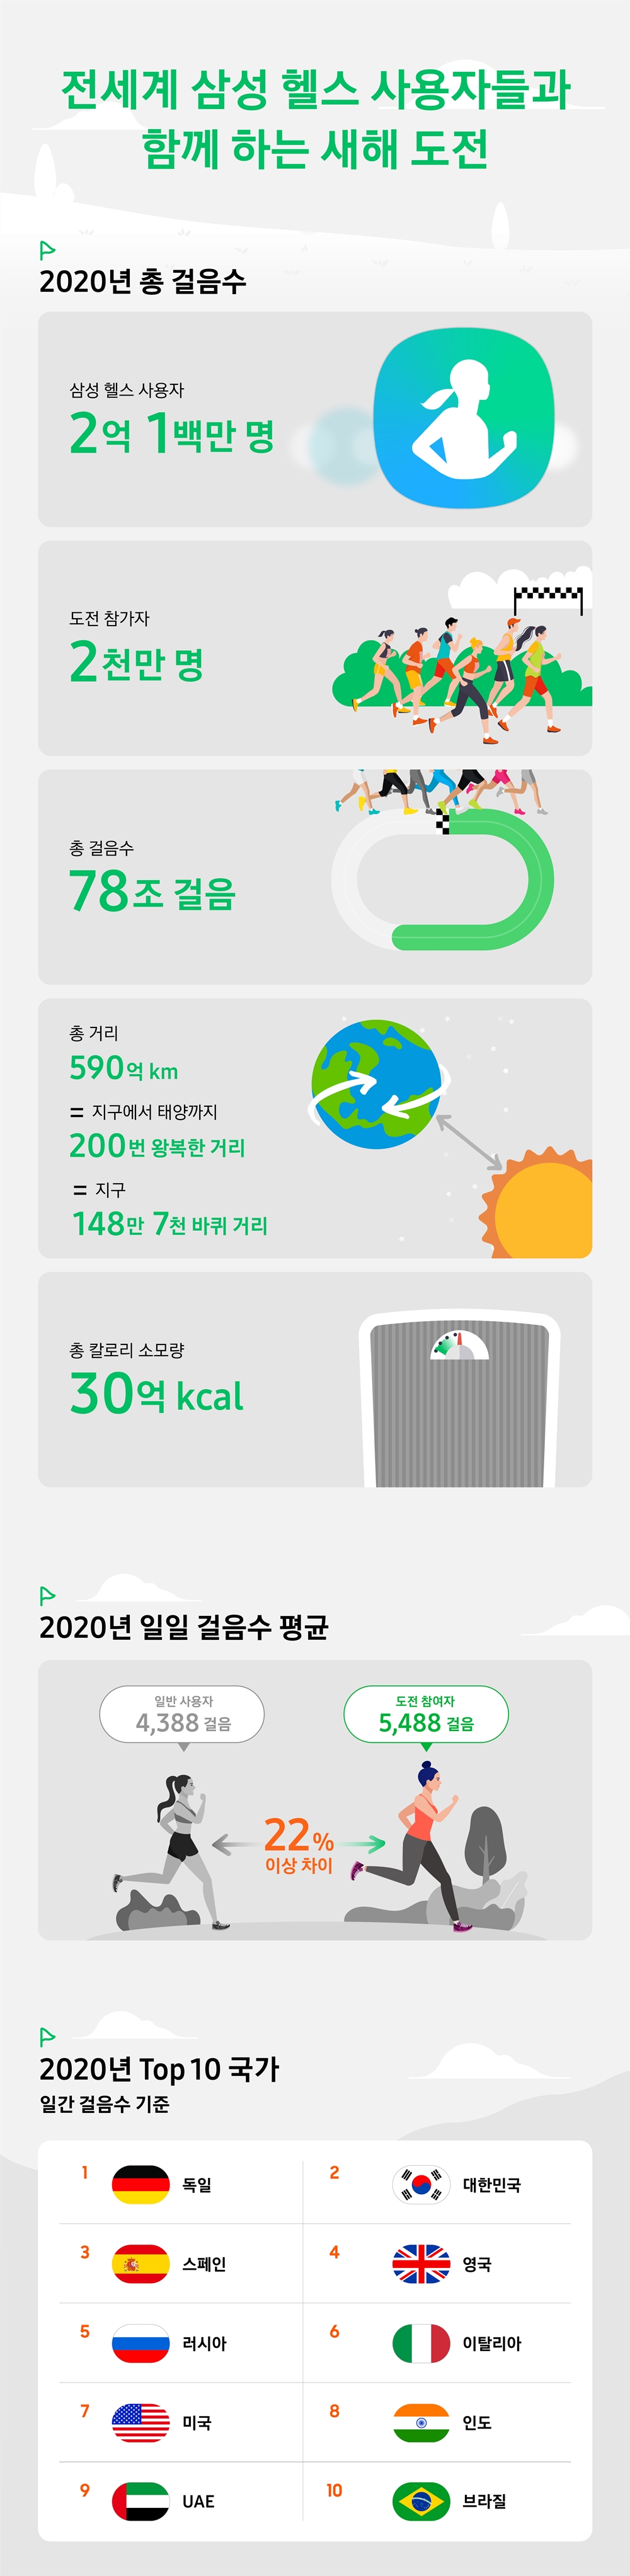 Samsung Health_Group Challenge_Infographic_KR